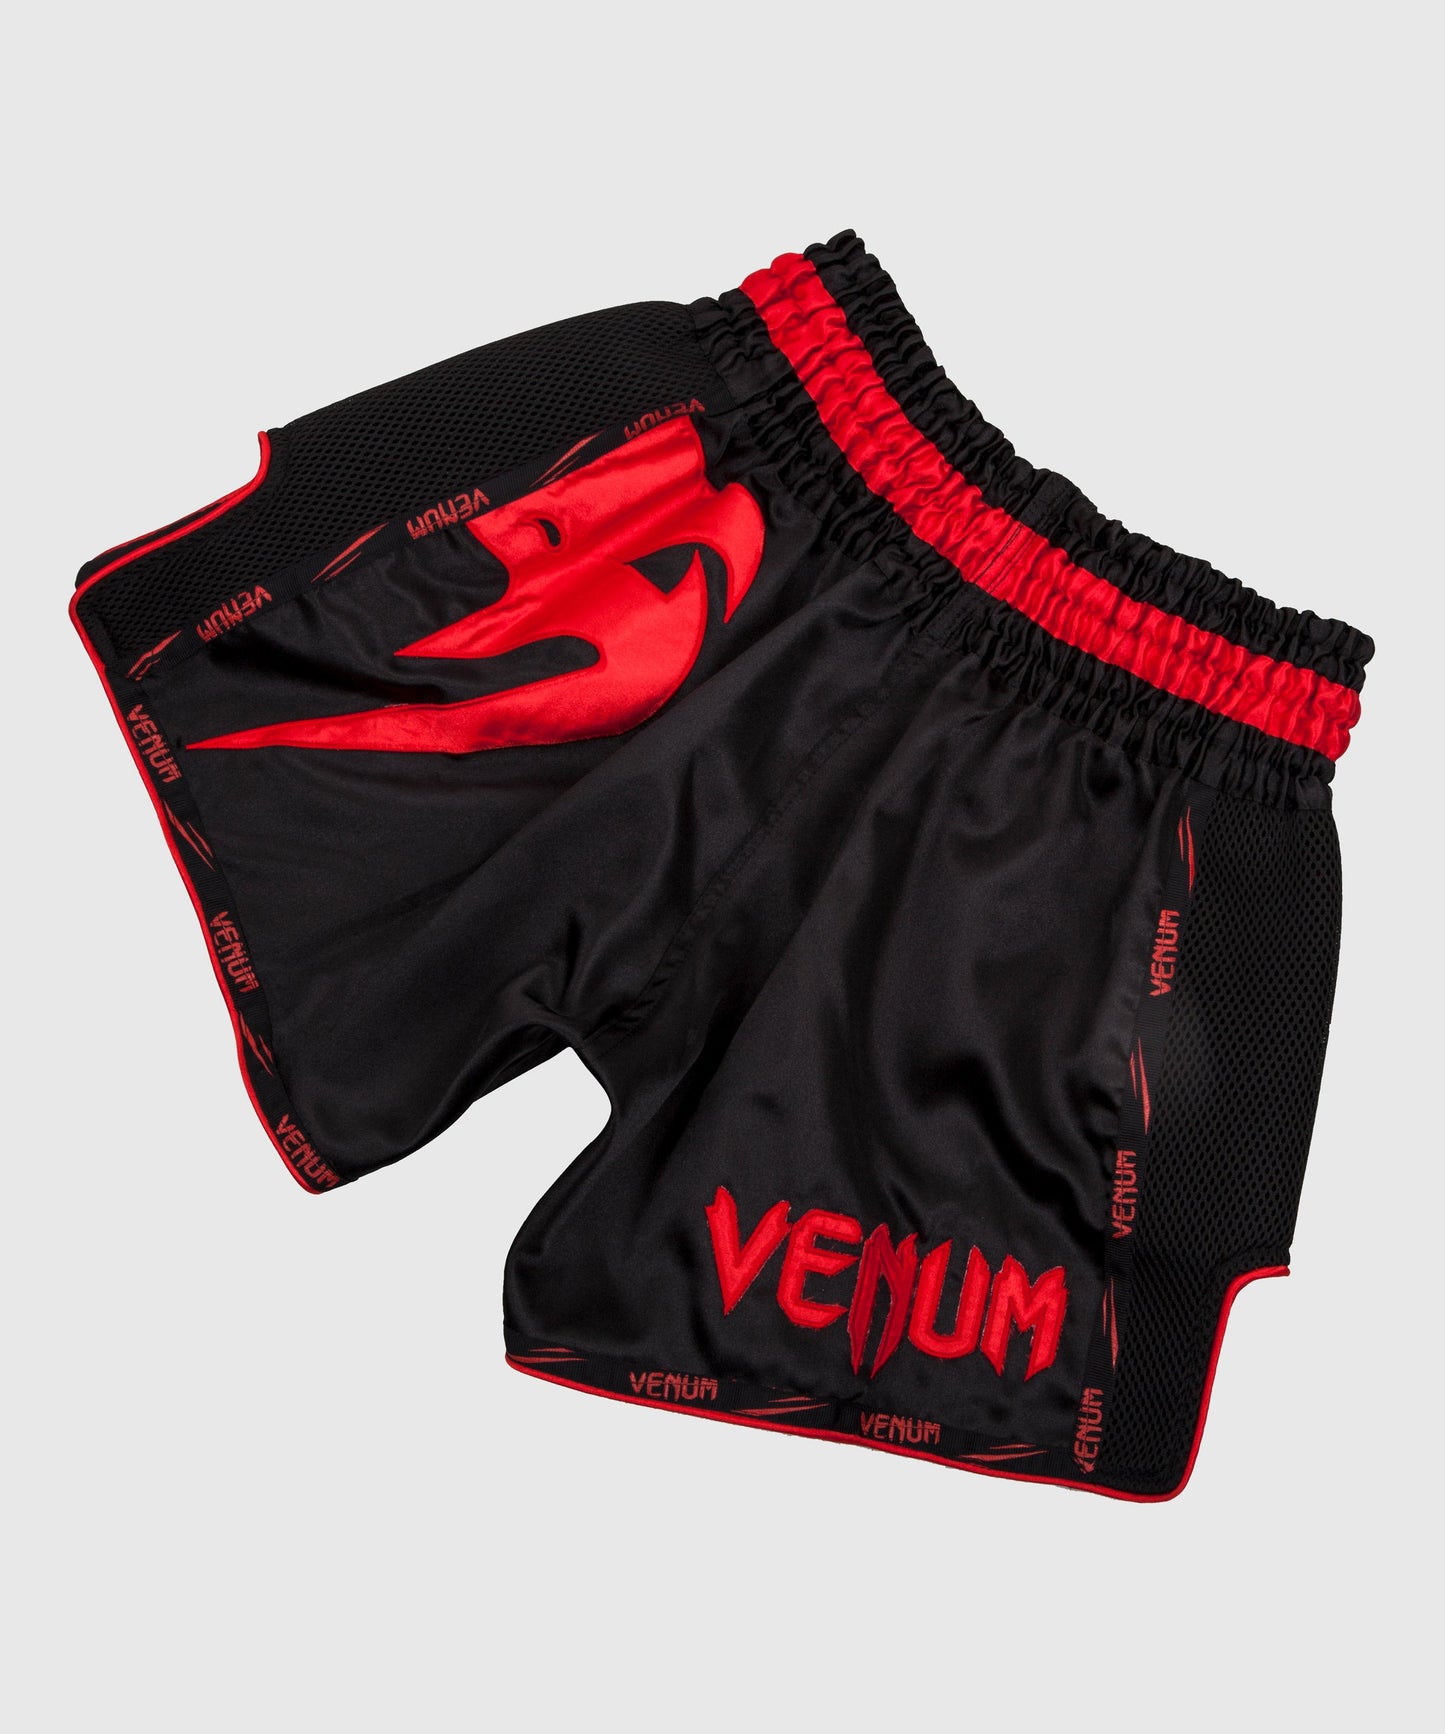 Venum Giant Muay Thai Shorts - Black/Red